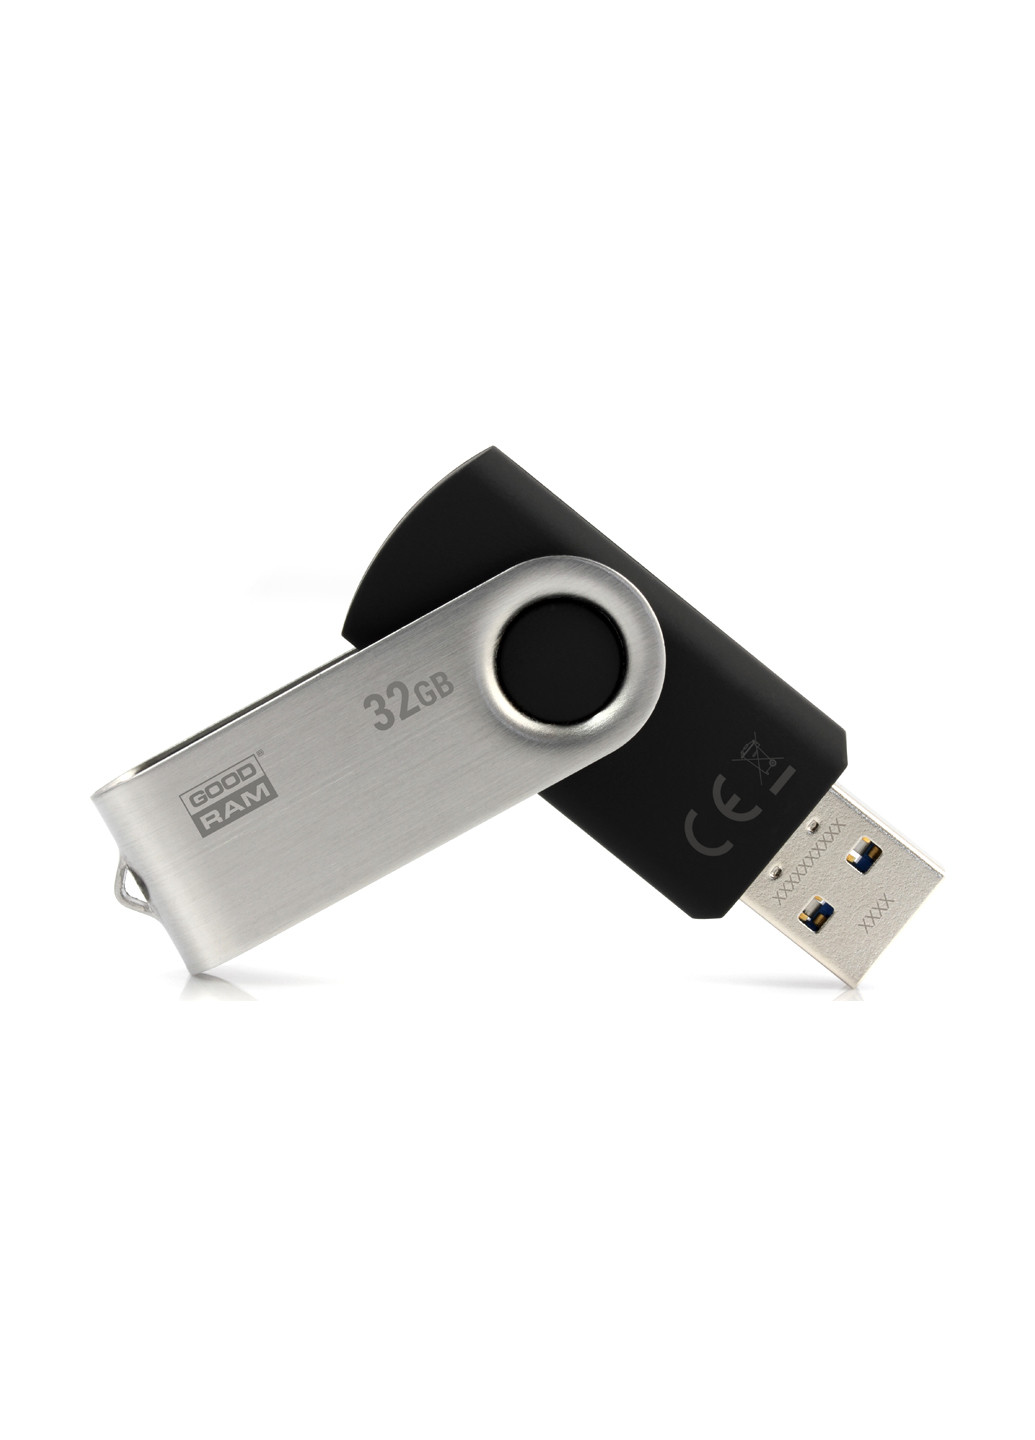 Флеш память USB UTS3 32GB USB 3.0 Black (UTS3-0320K0R11) Goodram флеш память usb goodram uts3 32gb usb 3.0 black (uts3-0320k0r11) (135165441)